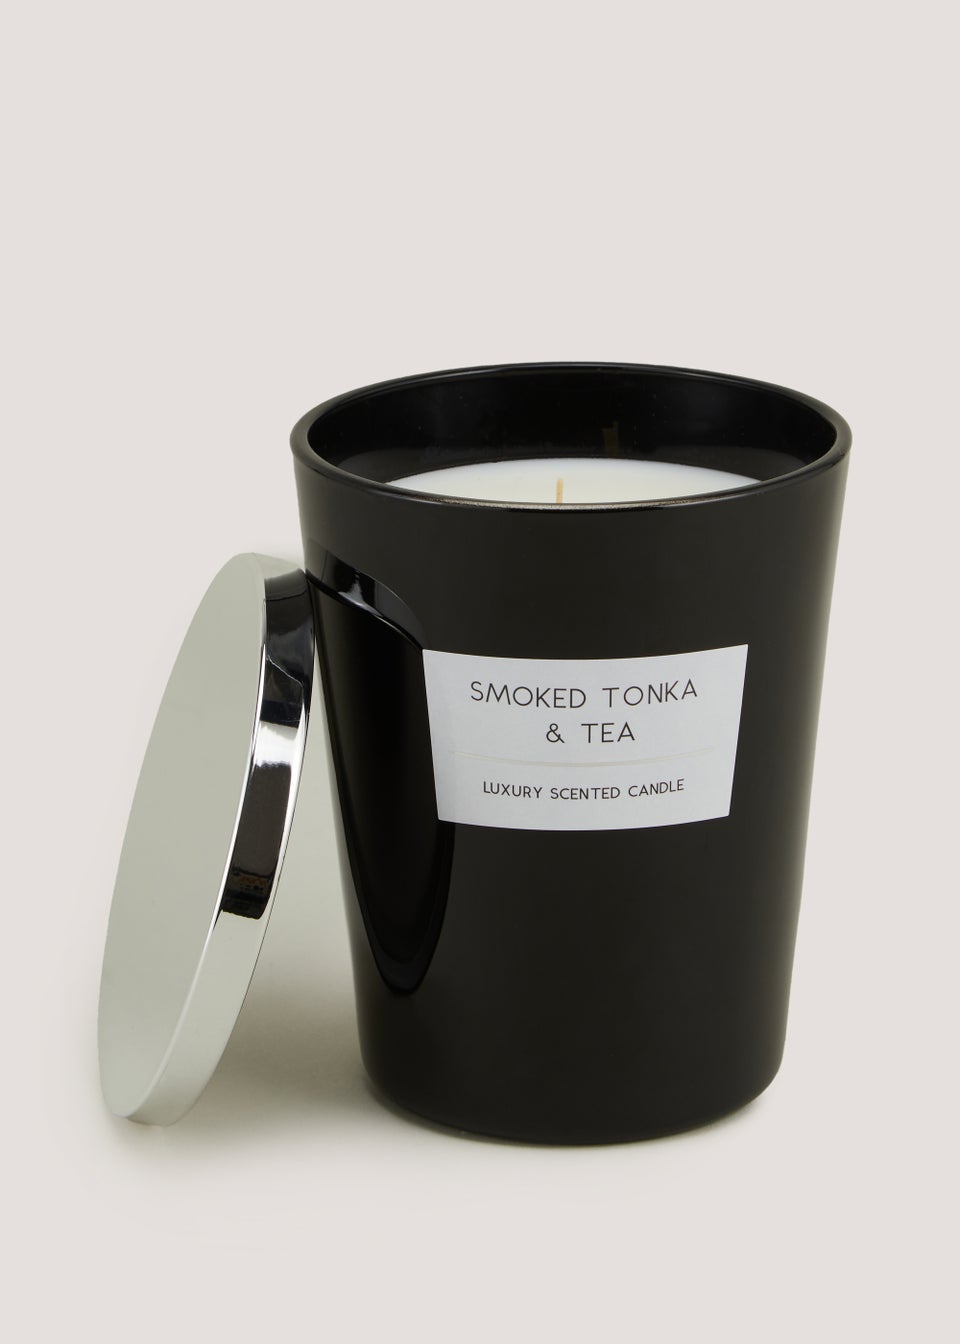 Smoked Tonka & Tea Luxury Scented Candle (16cm x 14cm)